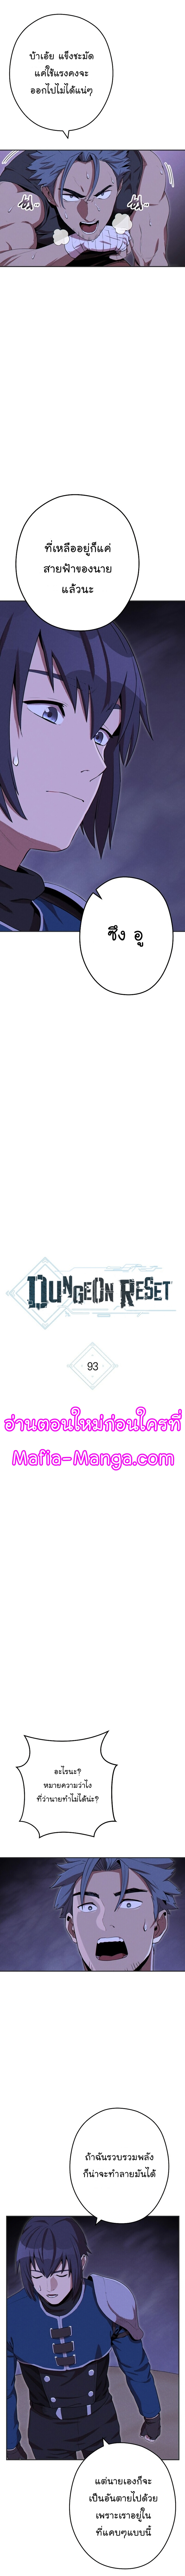 Dungeon Reset 93 02